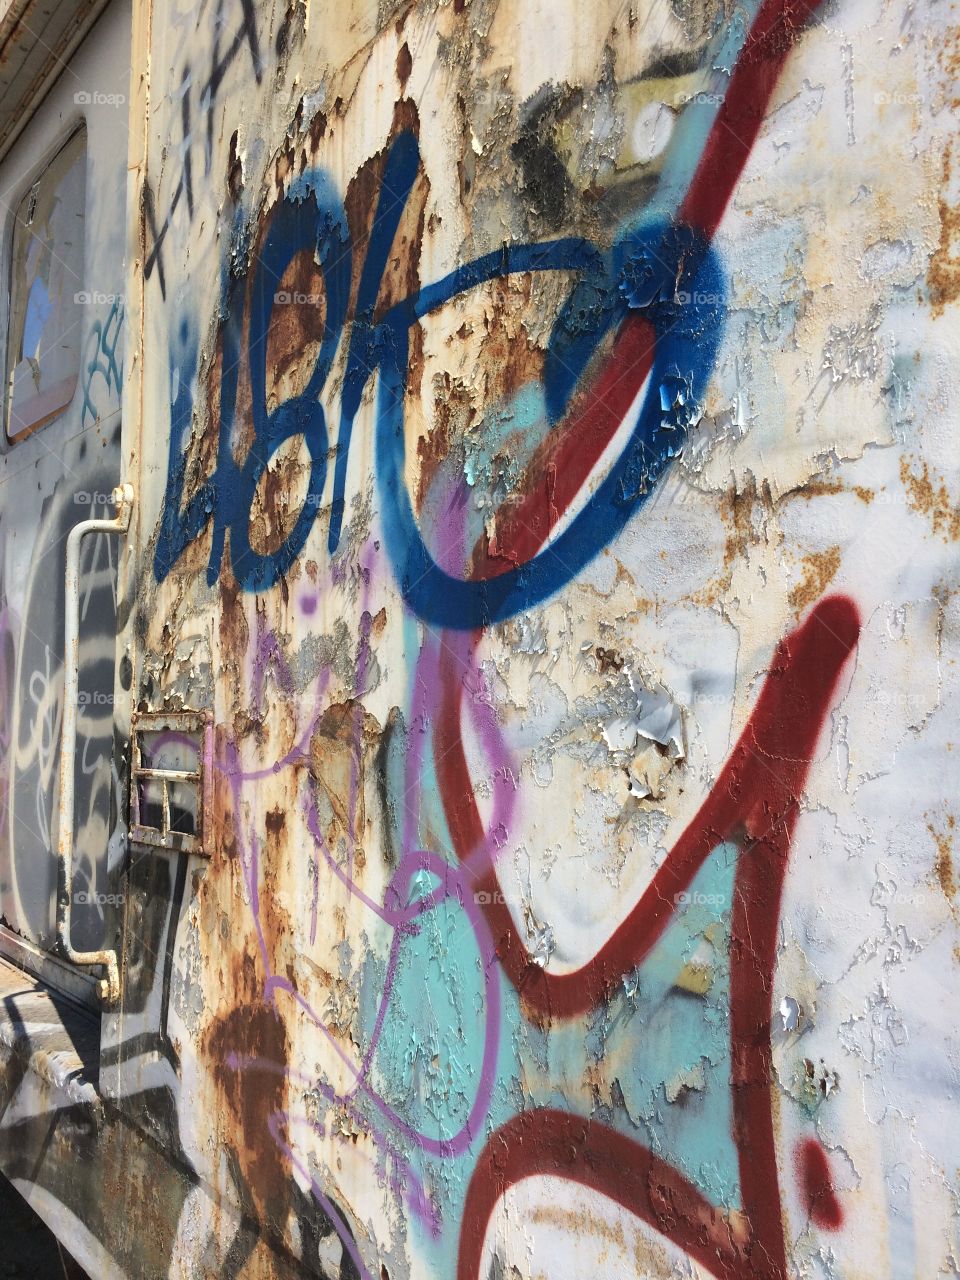 Rust and graffiti 